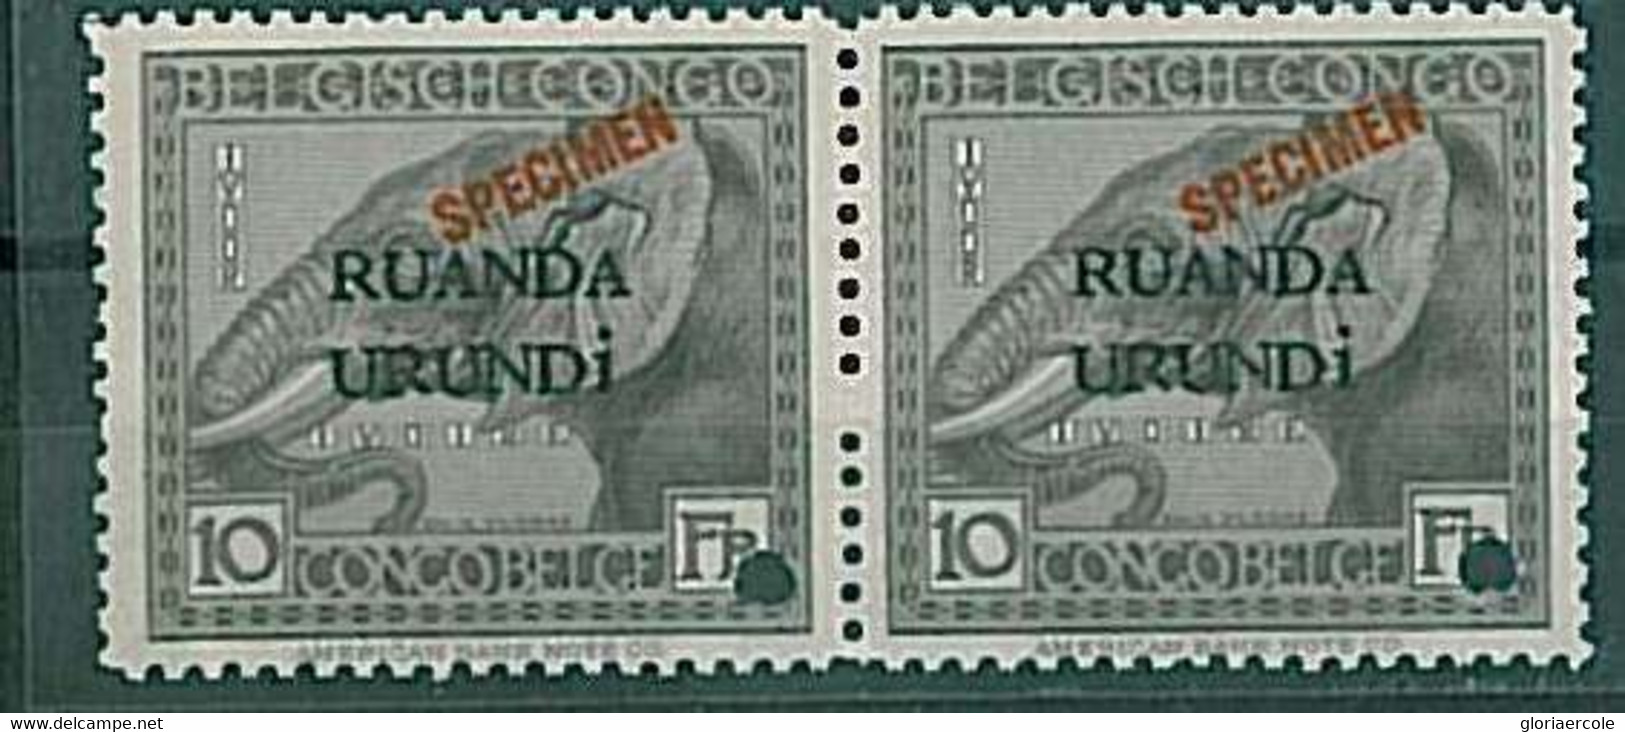 20568 - RUANDA URUNDI - STAMPS : Pair Of SPECIMEN Stamps - ANIMALS: ELEPHANT - Ongebruikt